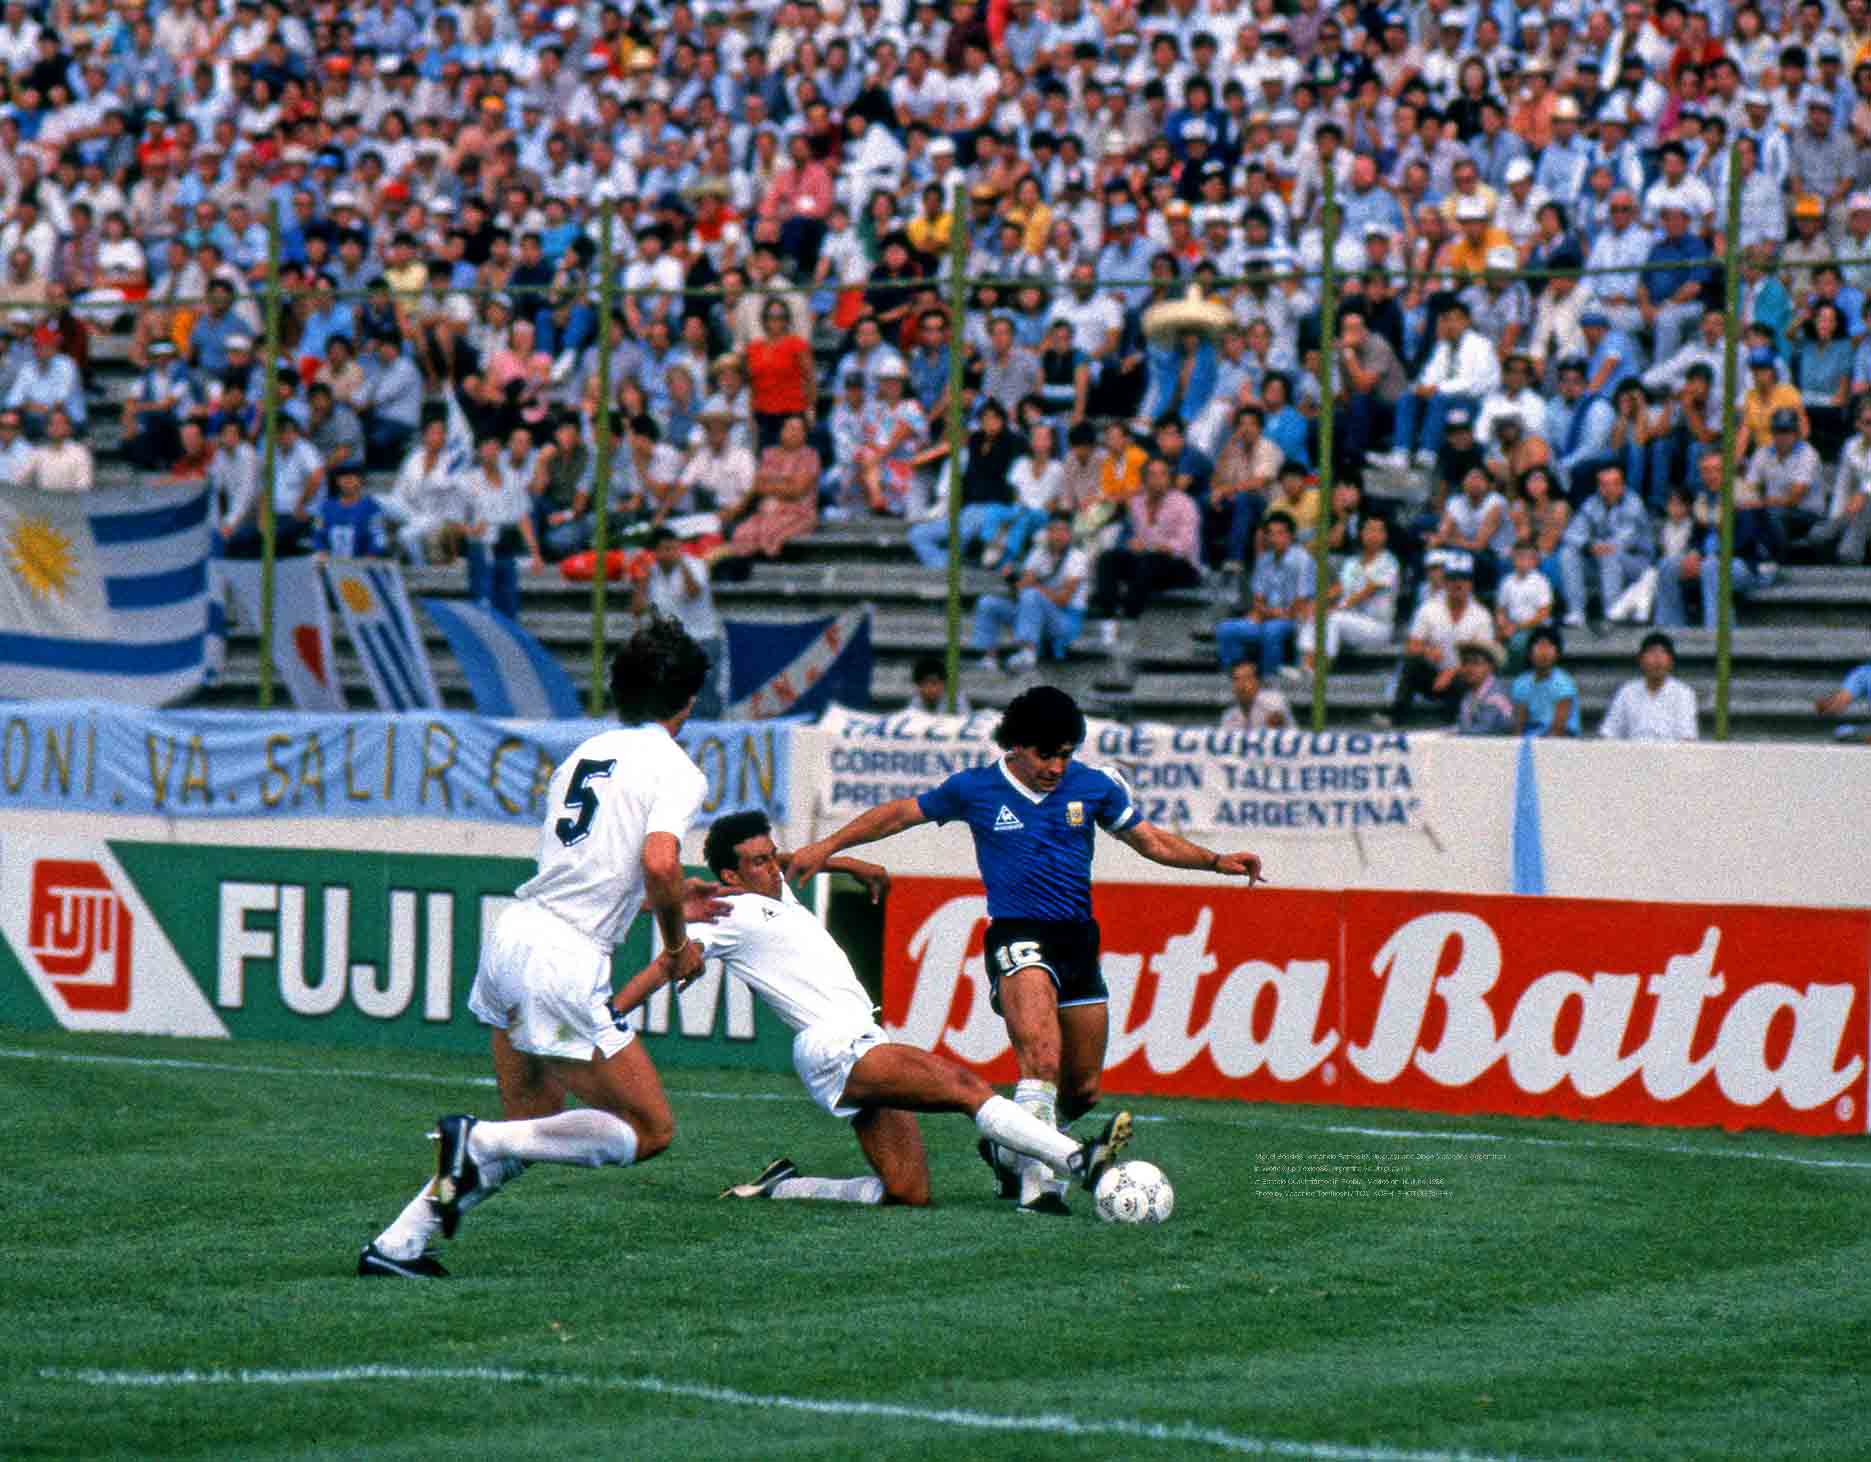 Uruguay vs Argentina LIVE: Mardonna in 1986 World Cup